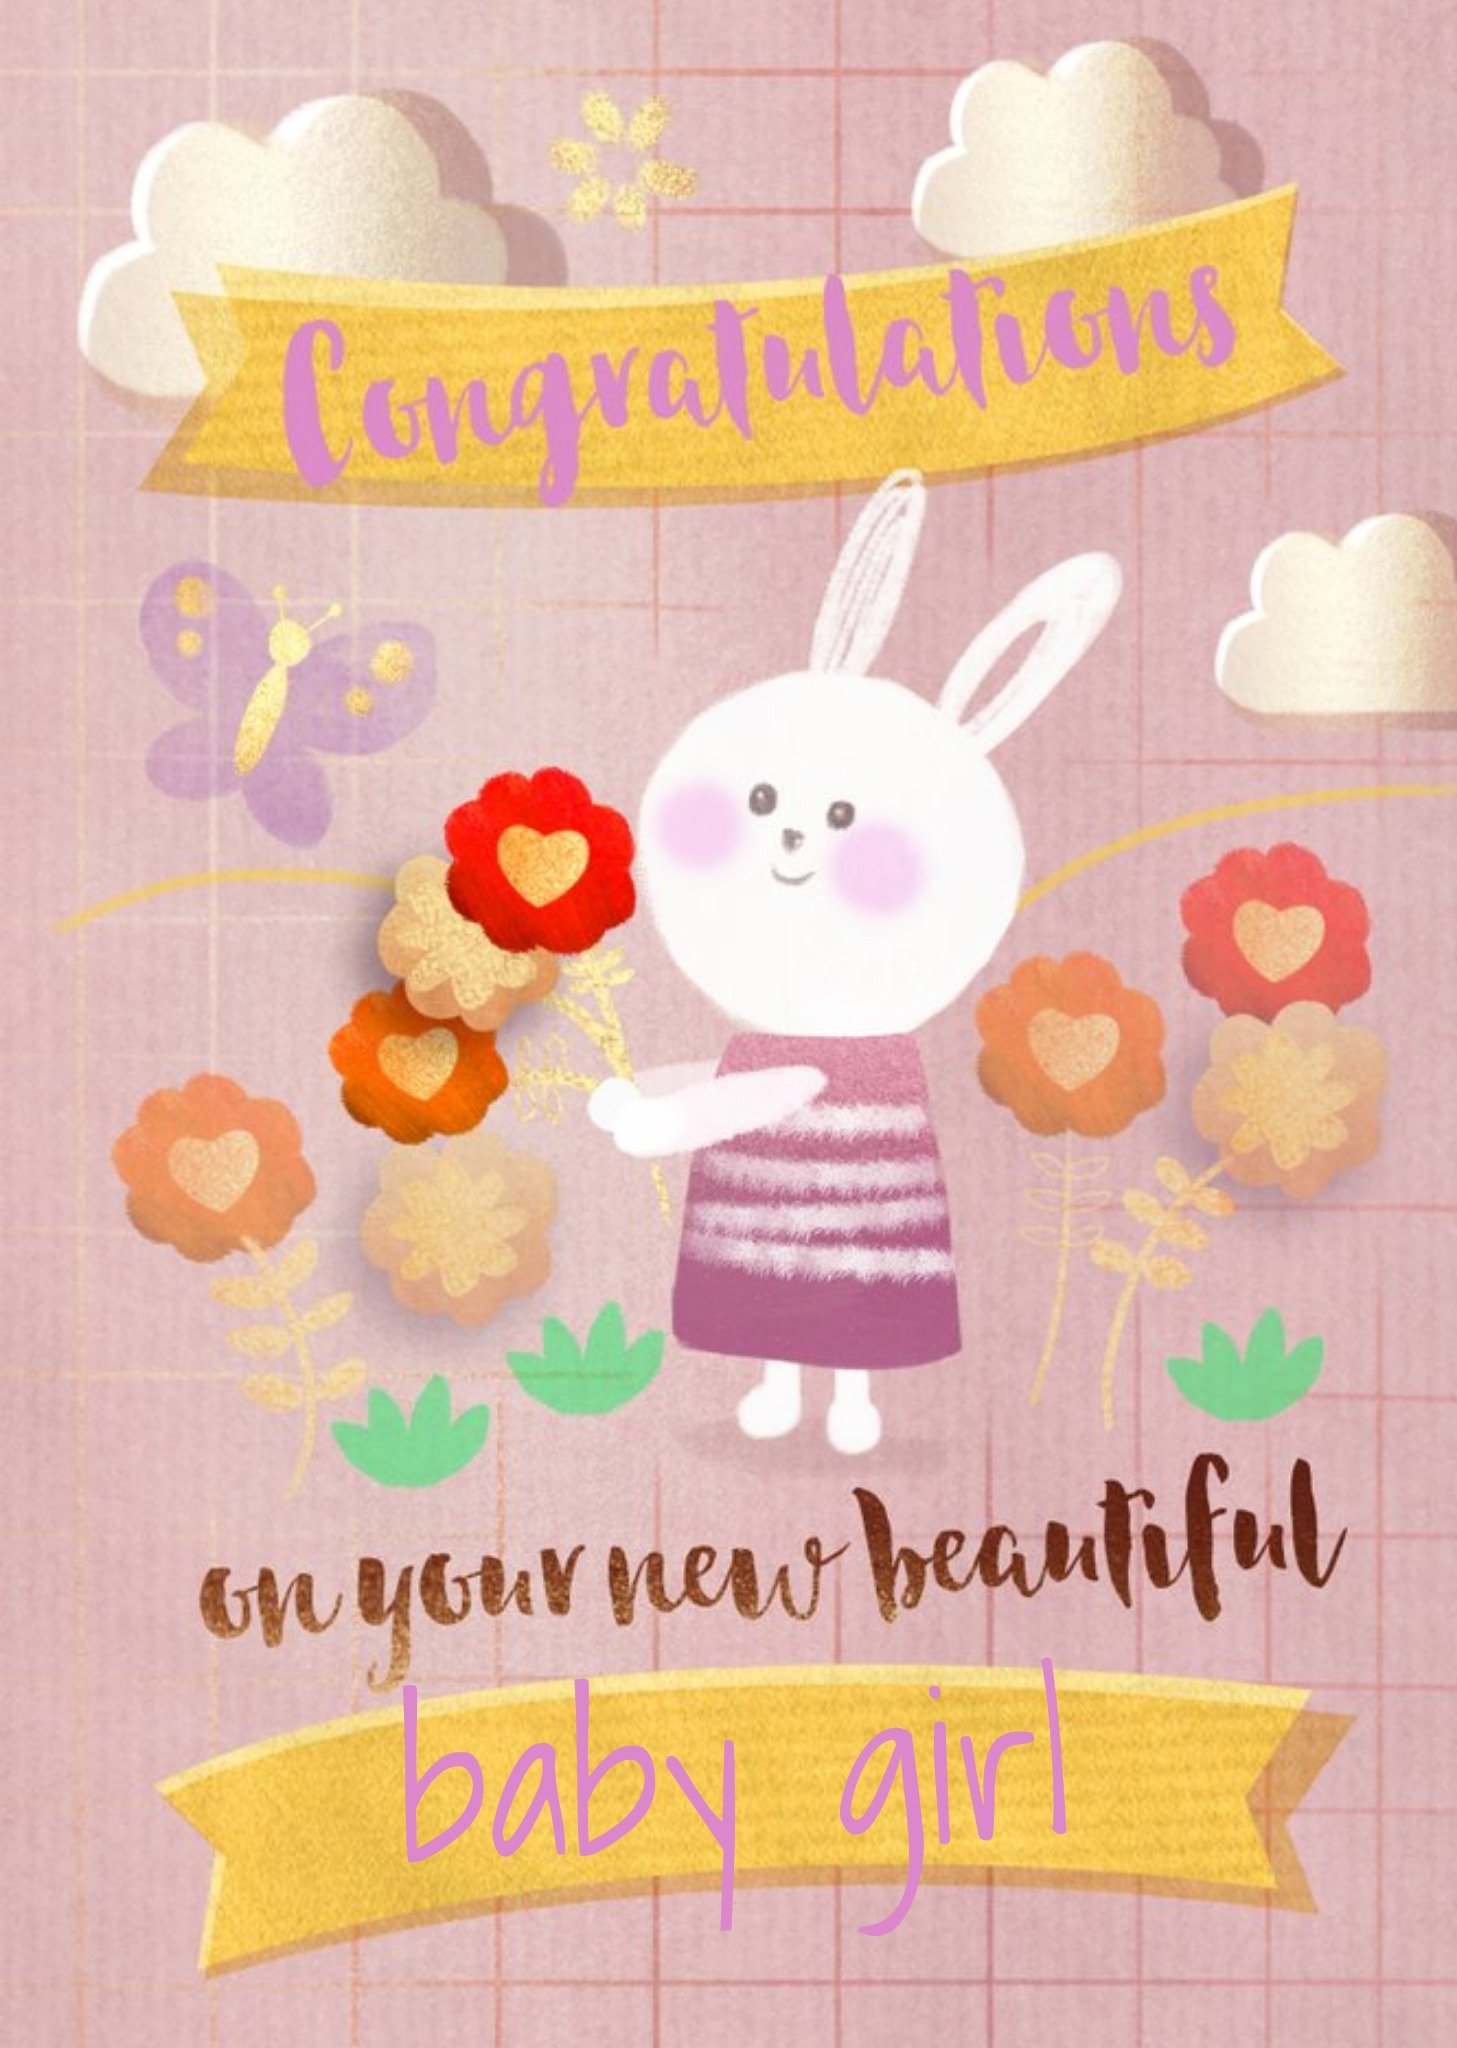 Moonpig Northern Lights Creative Illustration Congratulations New Baby Girl Card, Large